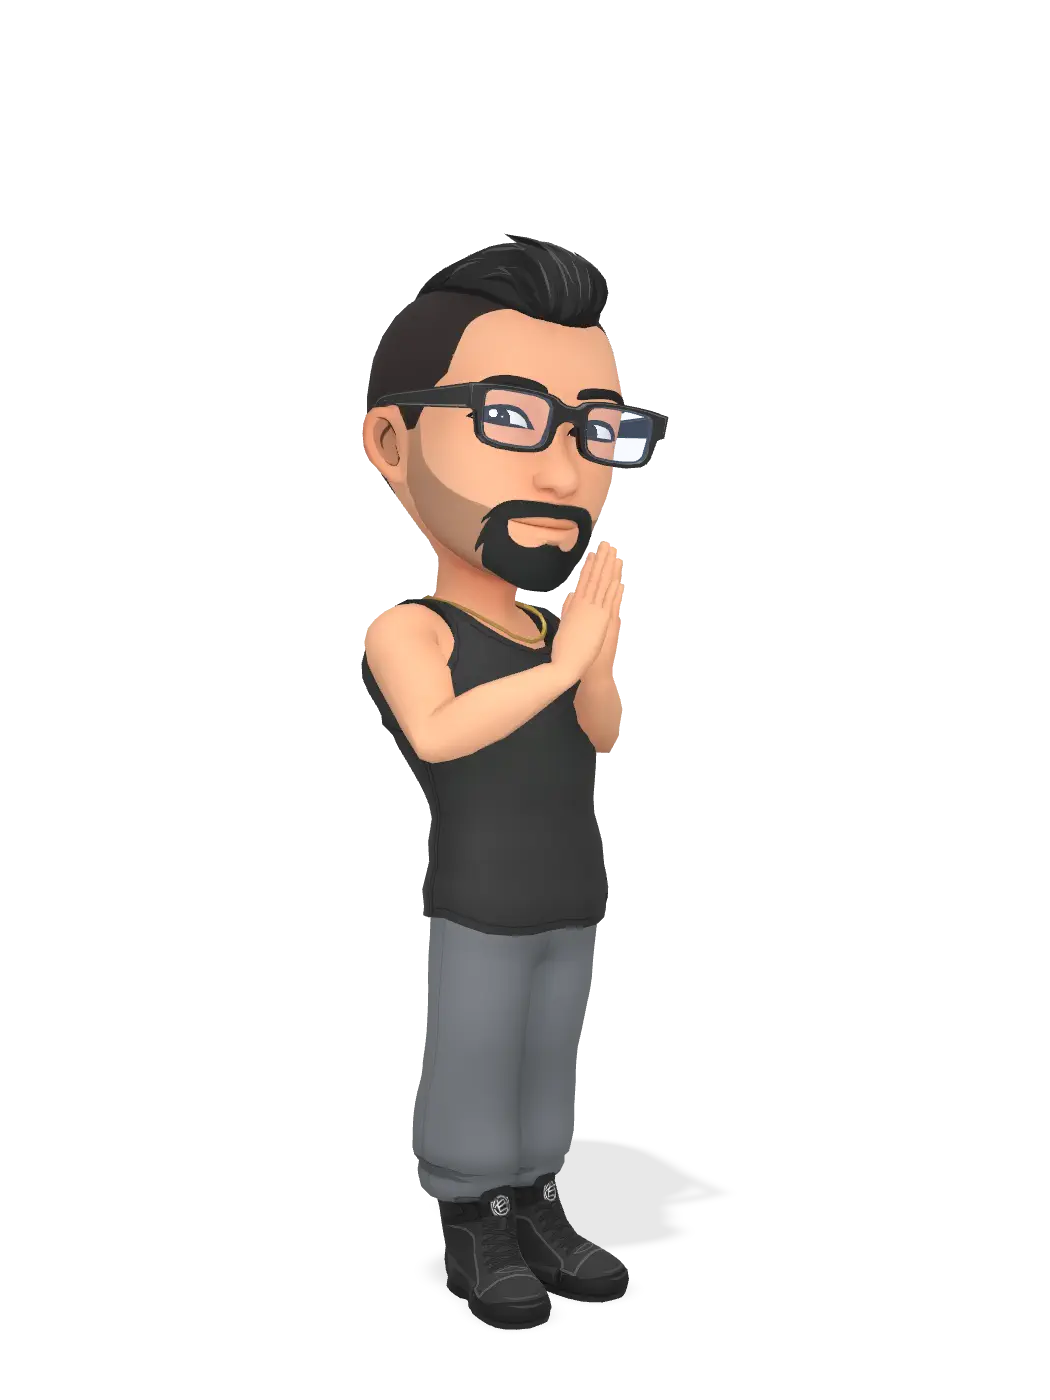 3D Bitmoji for werksjdm1 avatar